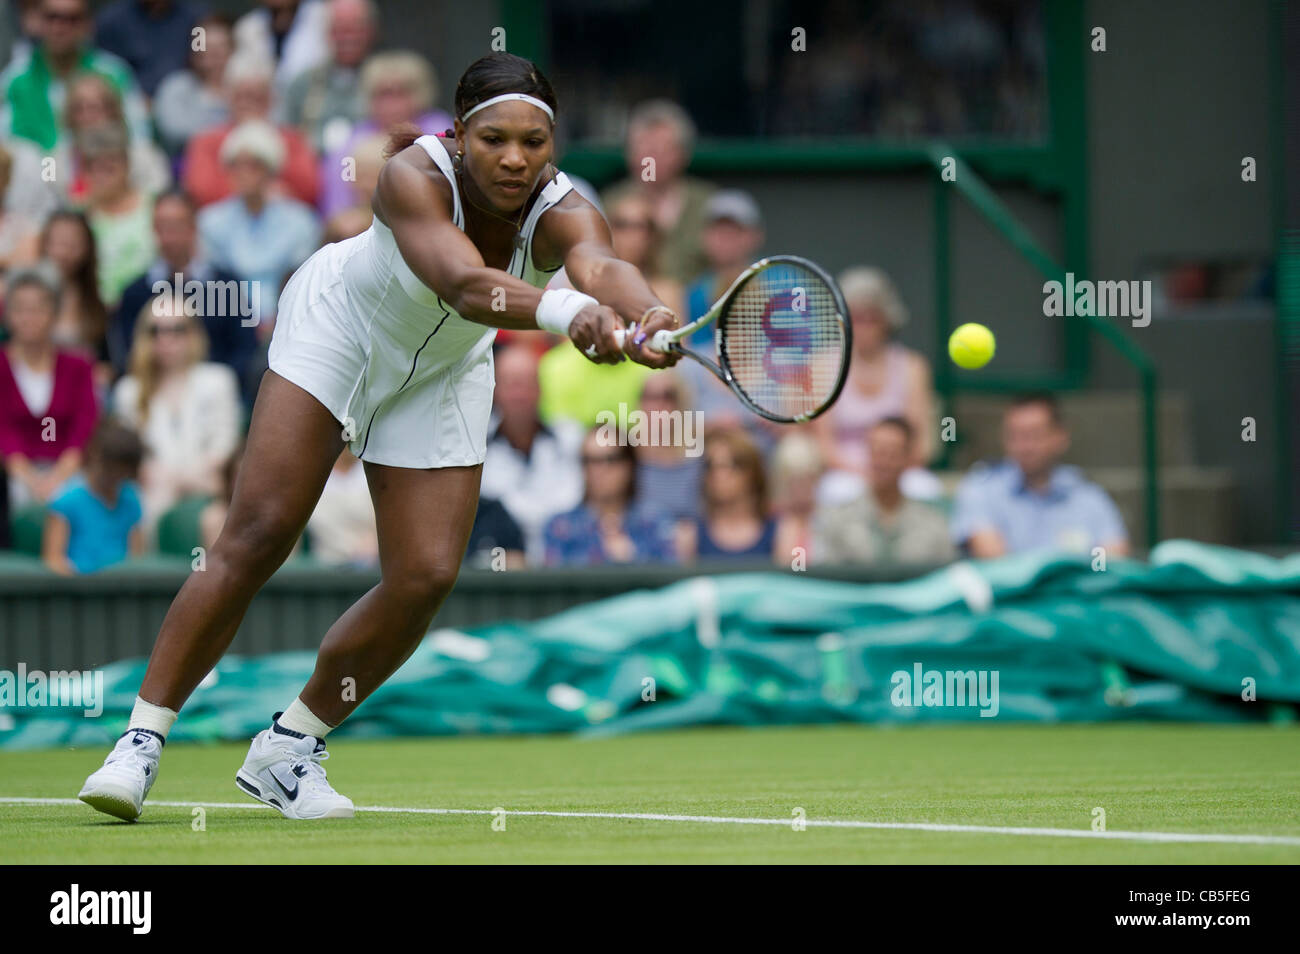 21.06.2011. Aravane Rezai FRA V Serena Williams USA (7). Serena in Aktion. Das Tennisturnier von Wimbledon. Stockfoto